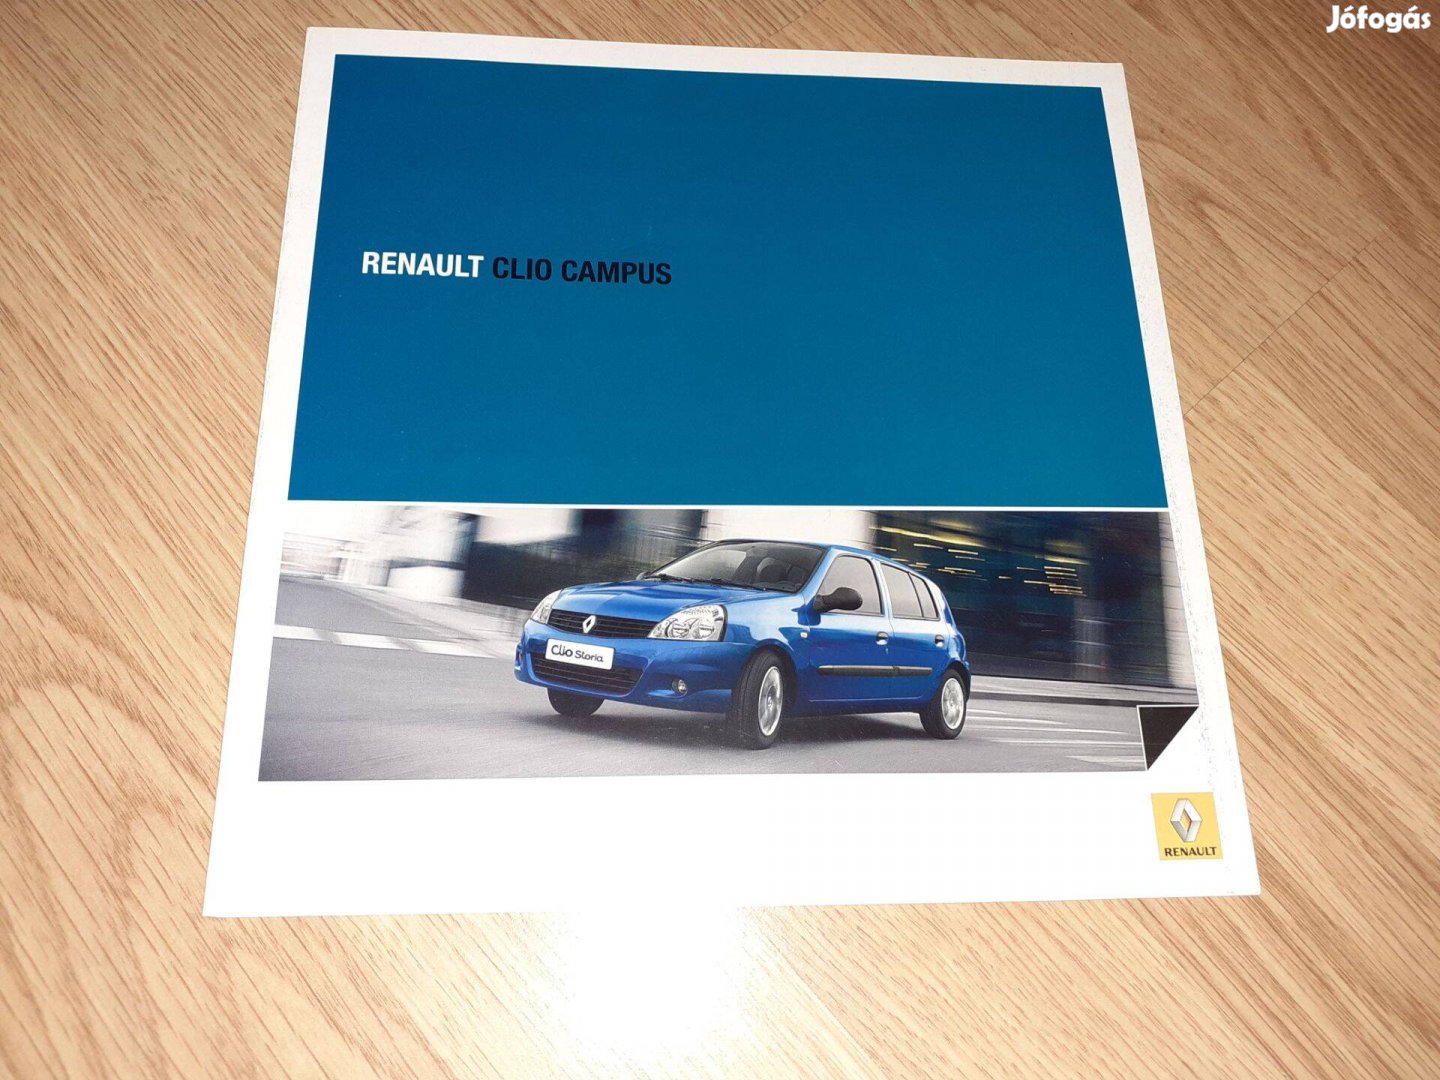 Renault Clio Campus prospektus - 2009, magyar nyelvű